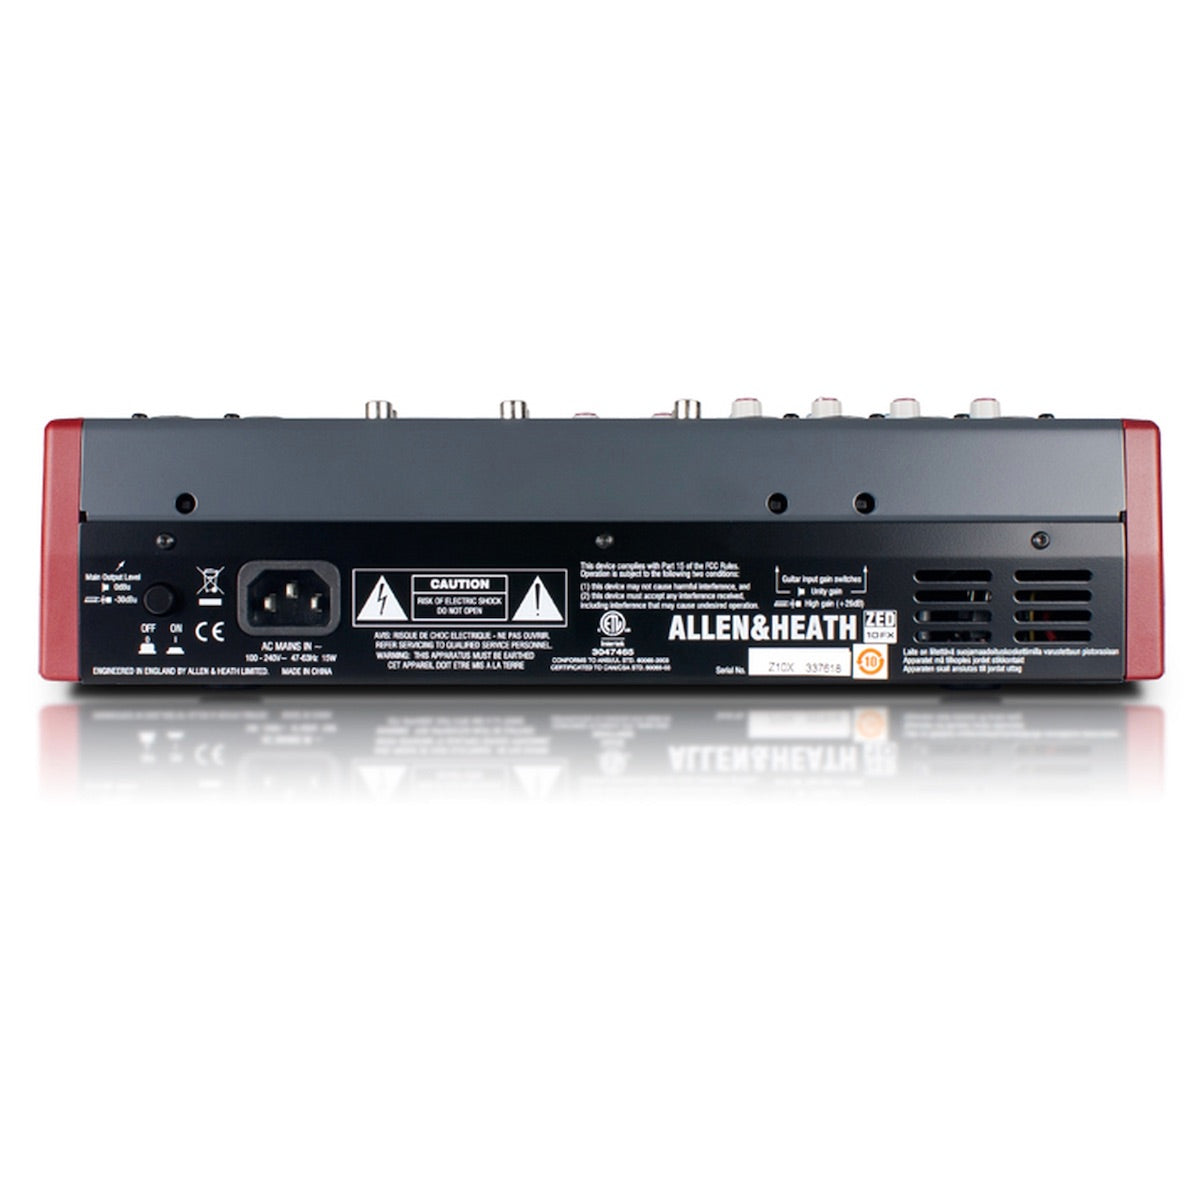 Allen & Heath ZED-10FX 10-Channel Analog USB Mixer with Effects, rear